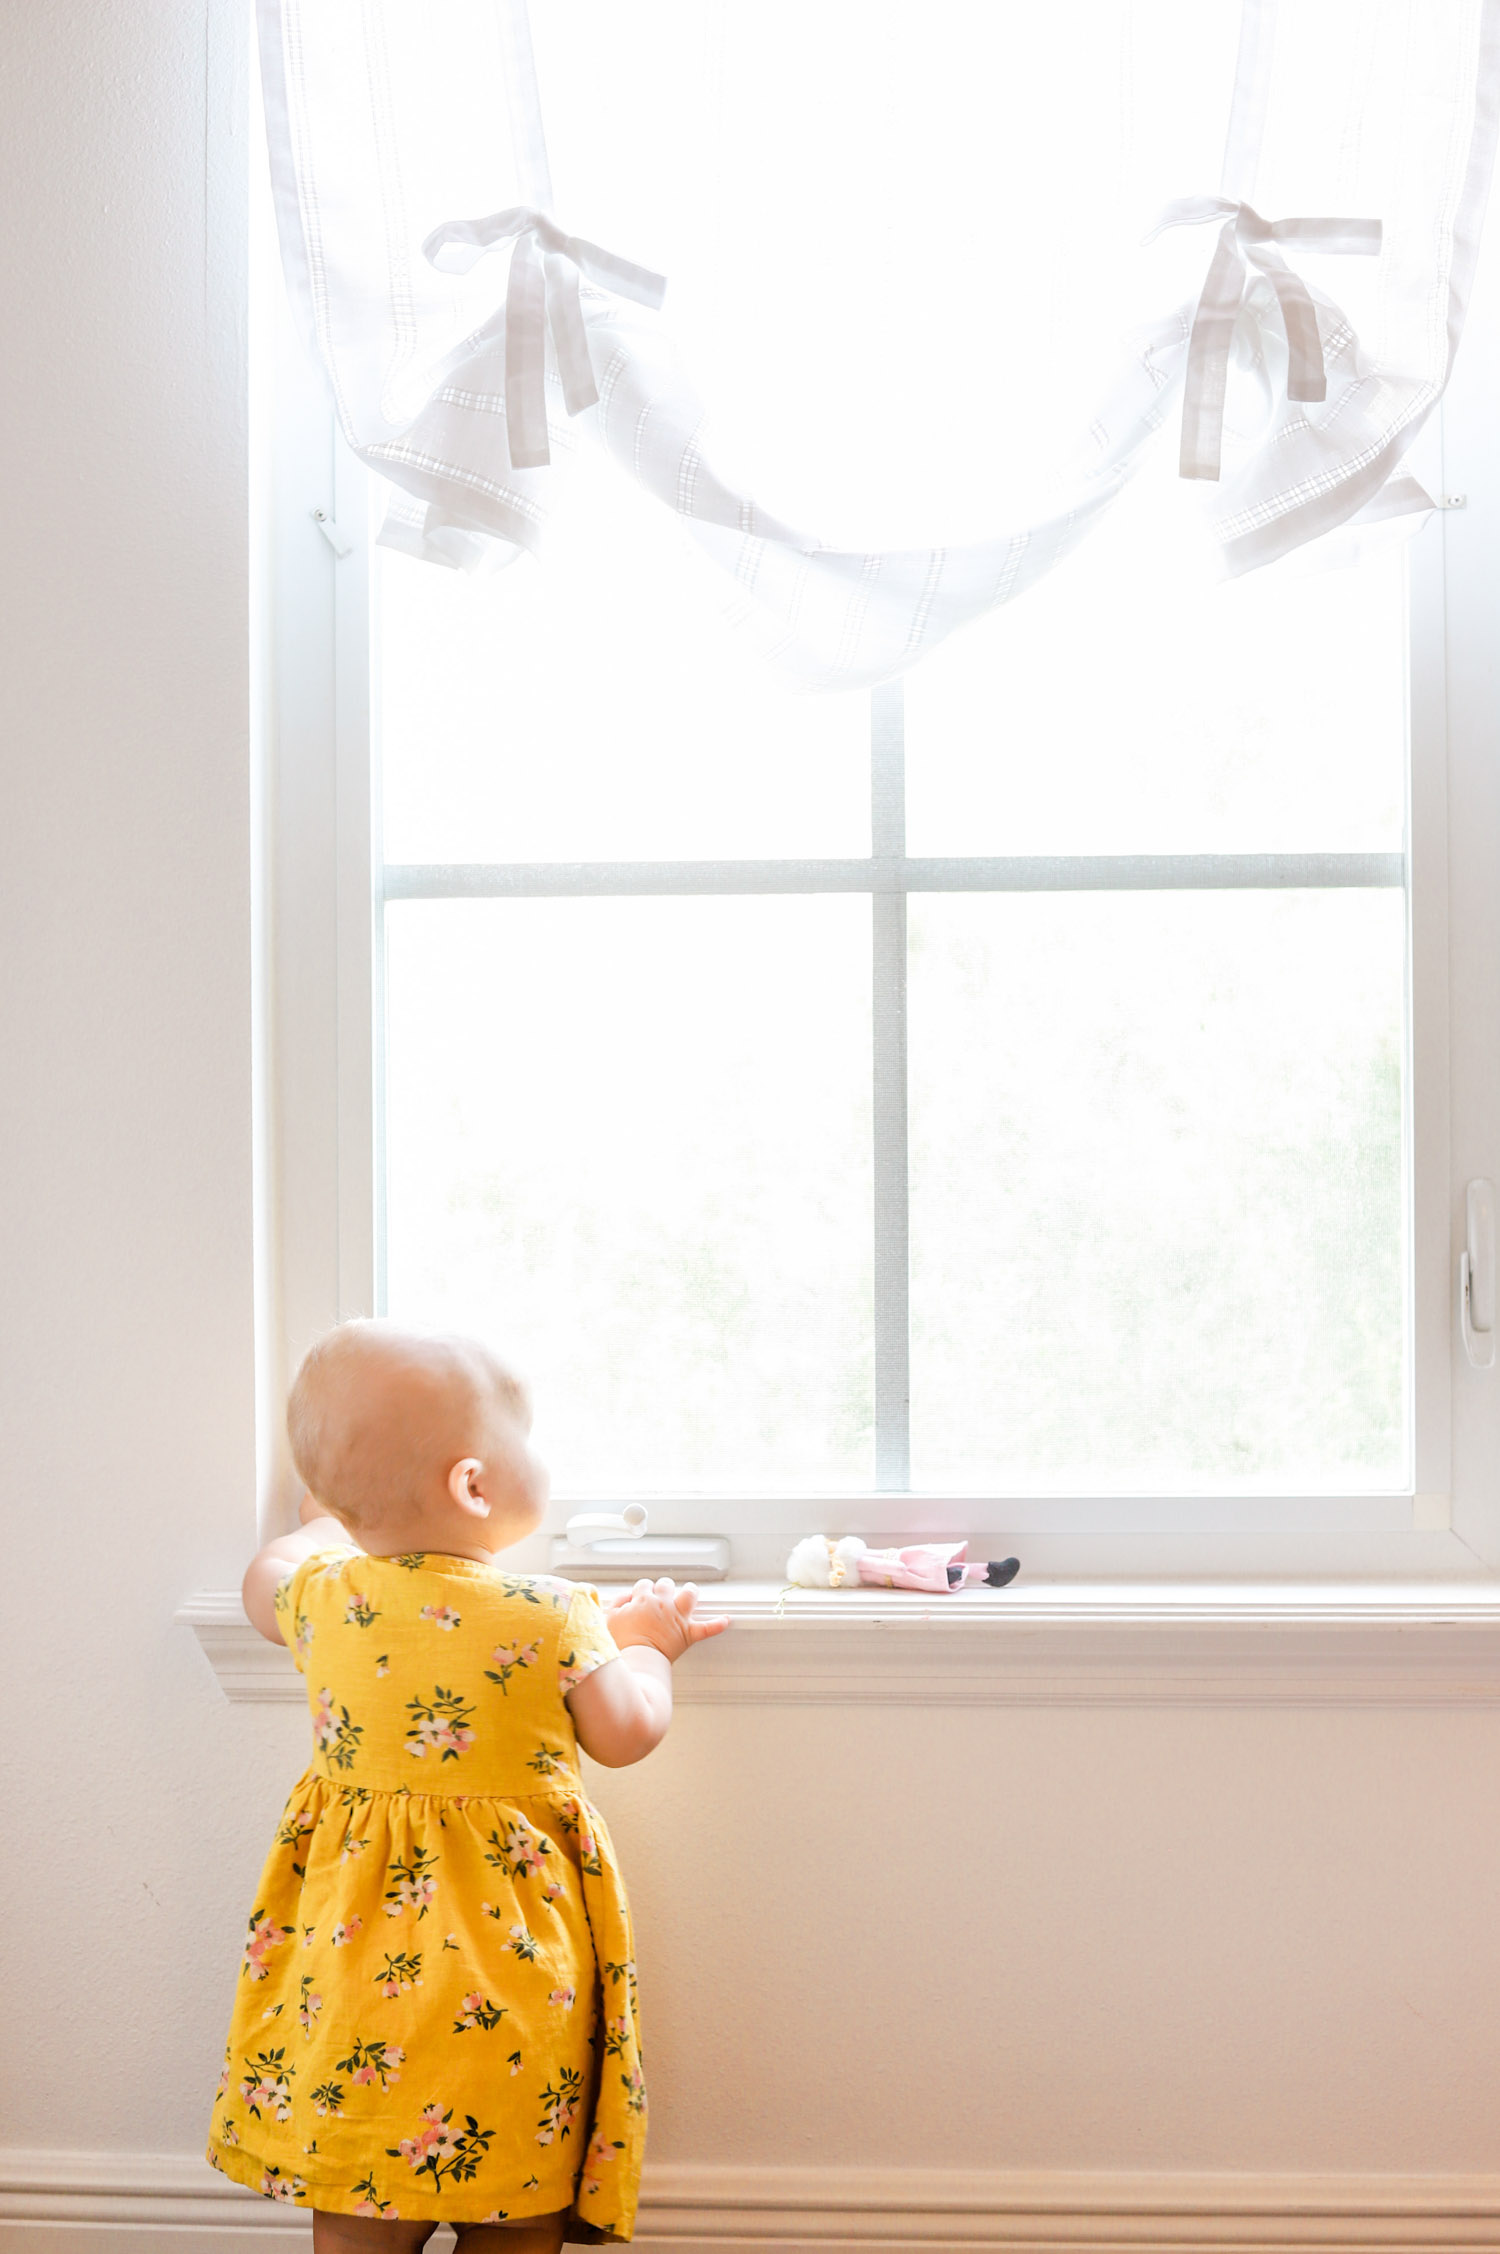 https://www.ashleybrookenicholas.com/wp-content/uploads/2020/09/baby-proofing-tips-window-covering-cords-safety-girl-nursery-8.jpg